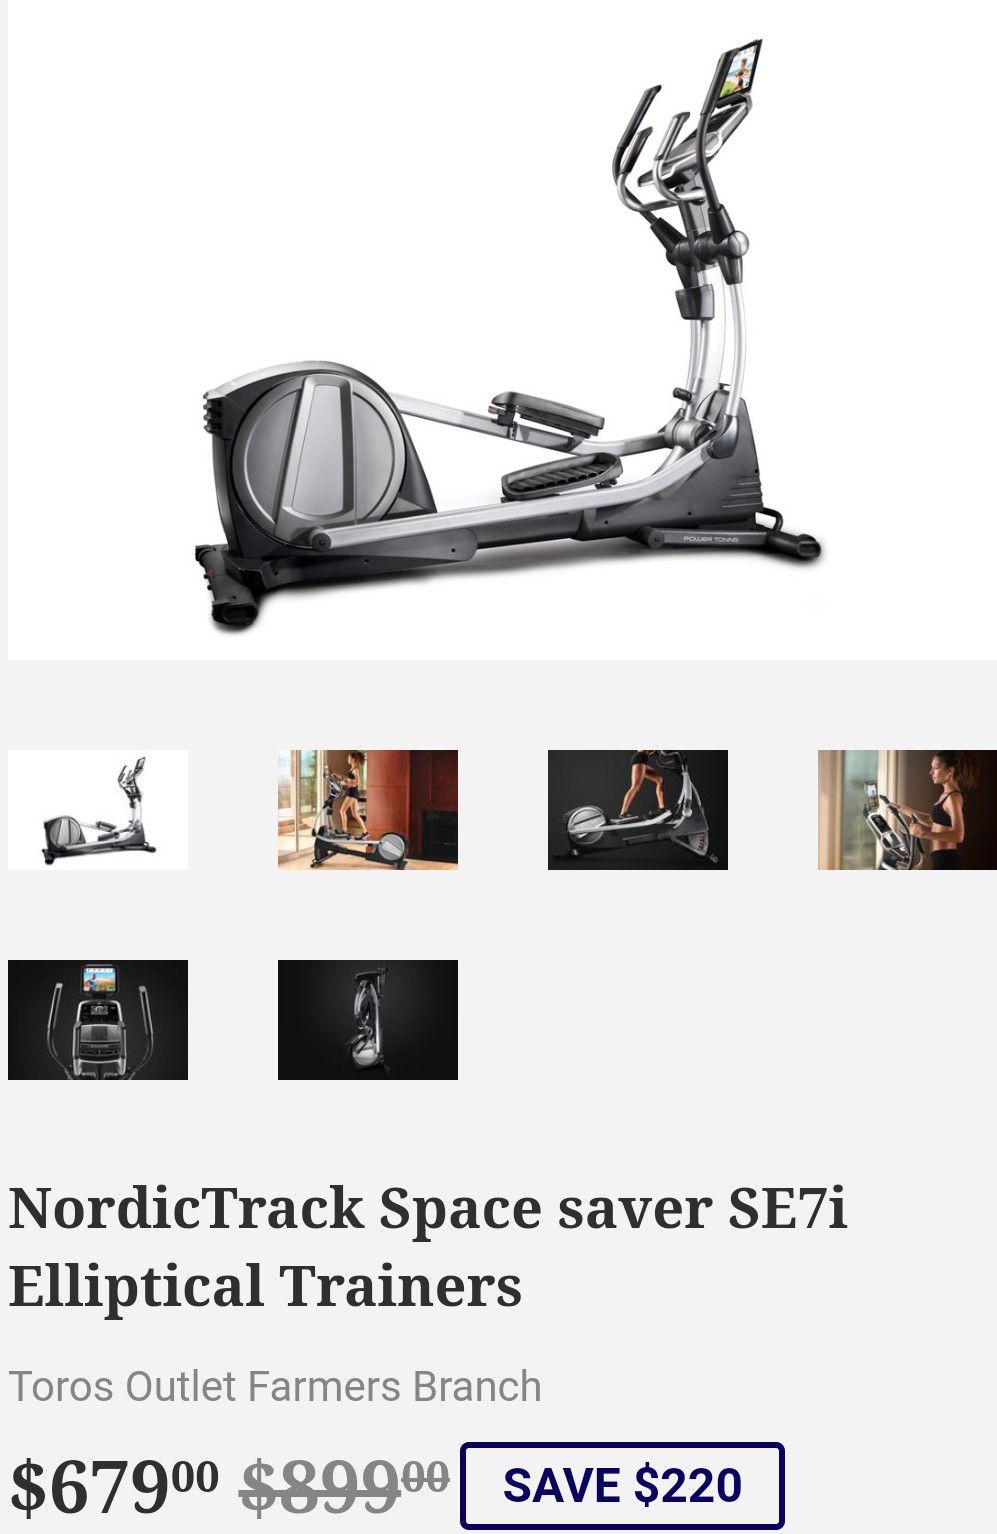 NordicTrack Space saver SE7i Elliptical Trainers